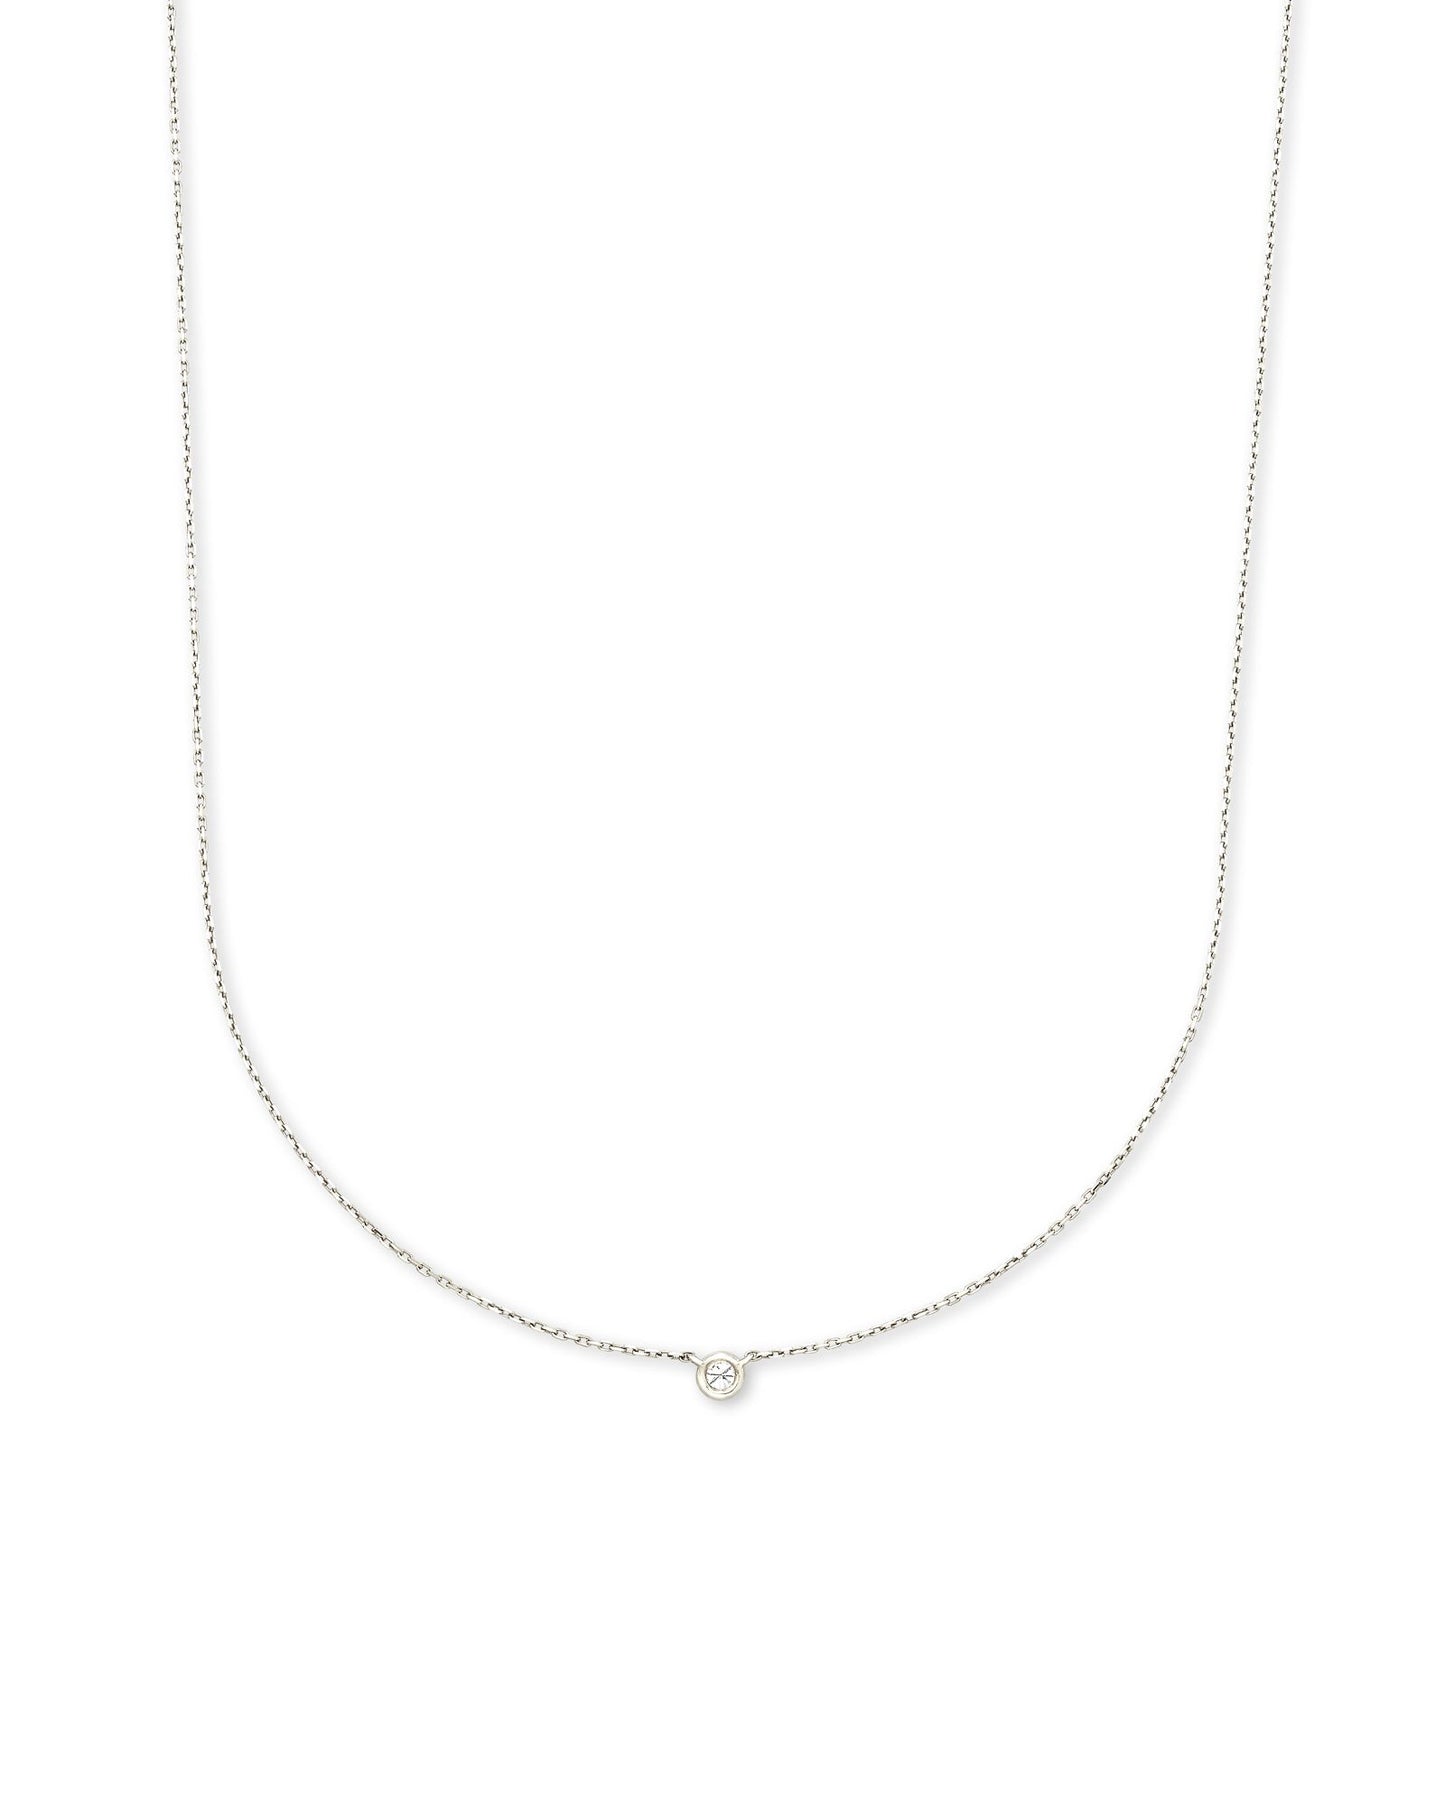 Kendra Scott Audrey Pendant Necklace 14K White Gold White Diamond-Necklaces-Kendra Scott-N1571WGD-The Twisted Chandelier